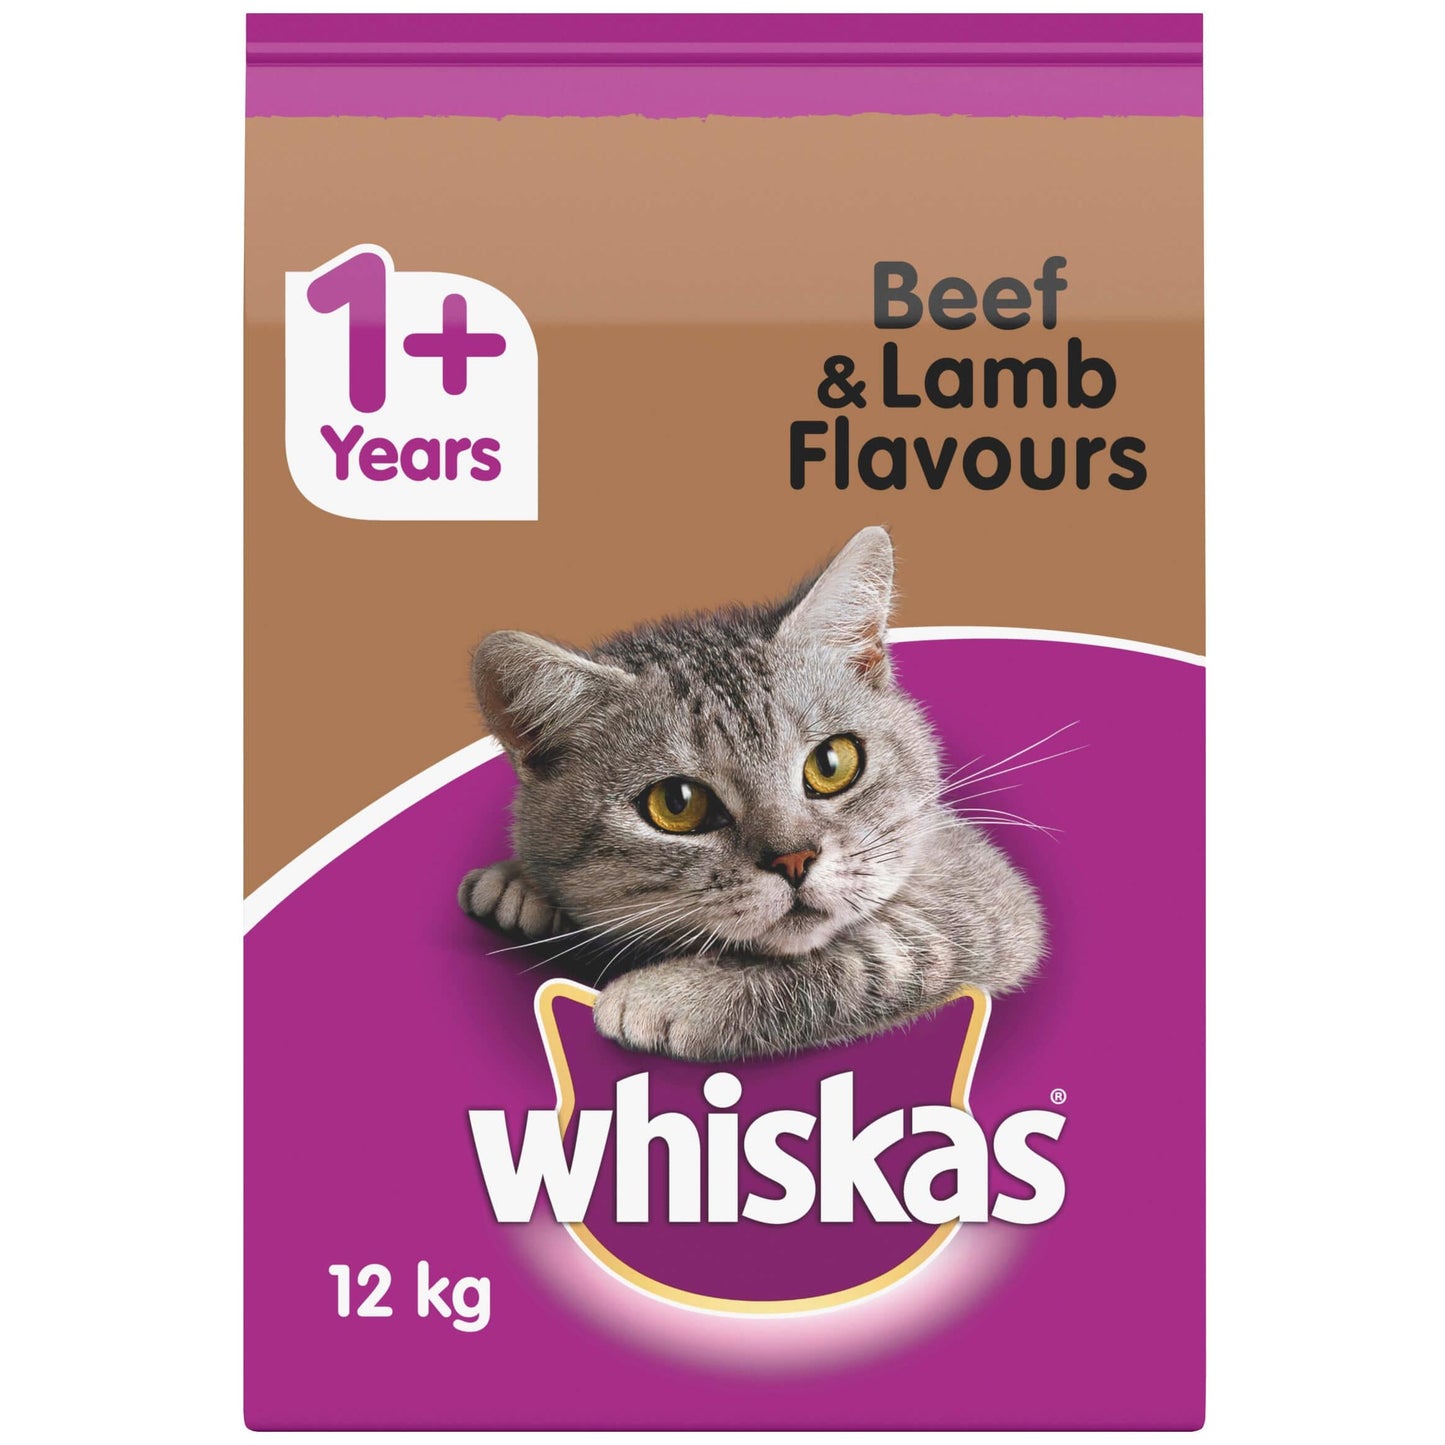 Whiskas Adult 1 Plus Year Beef & Lamb Dry Cat Food 12kg